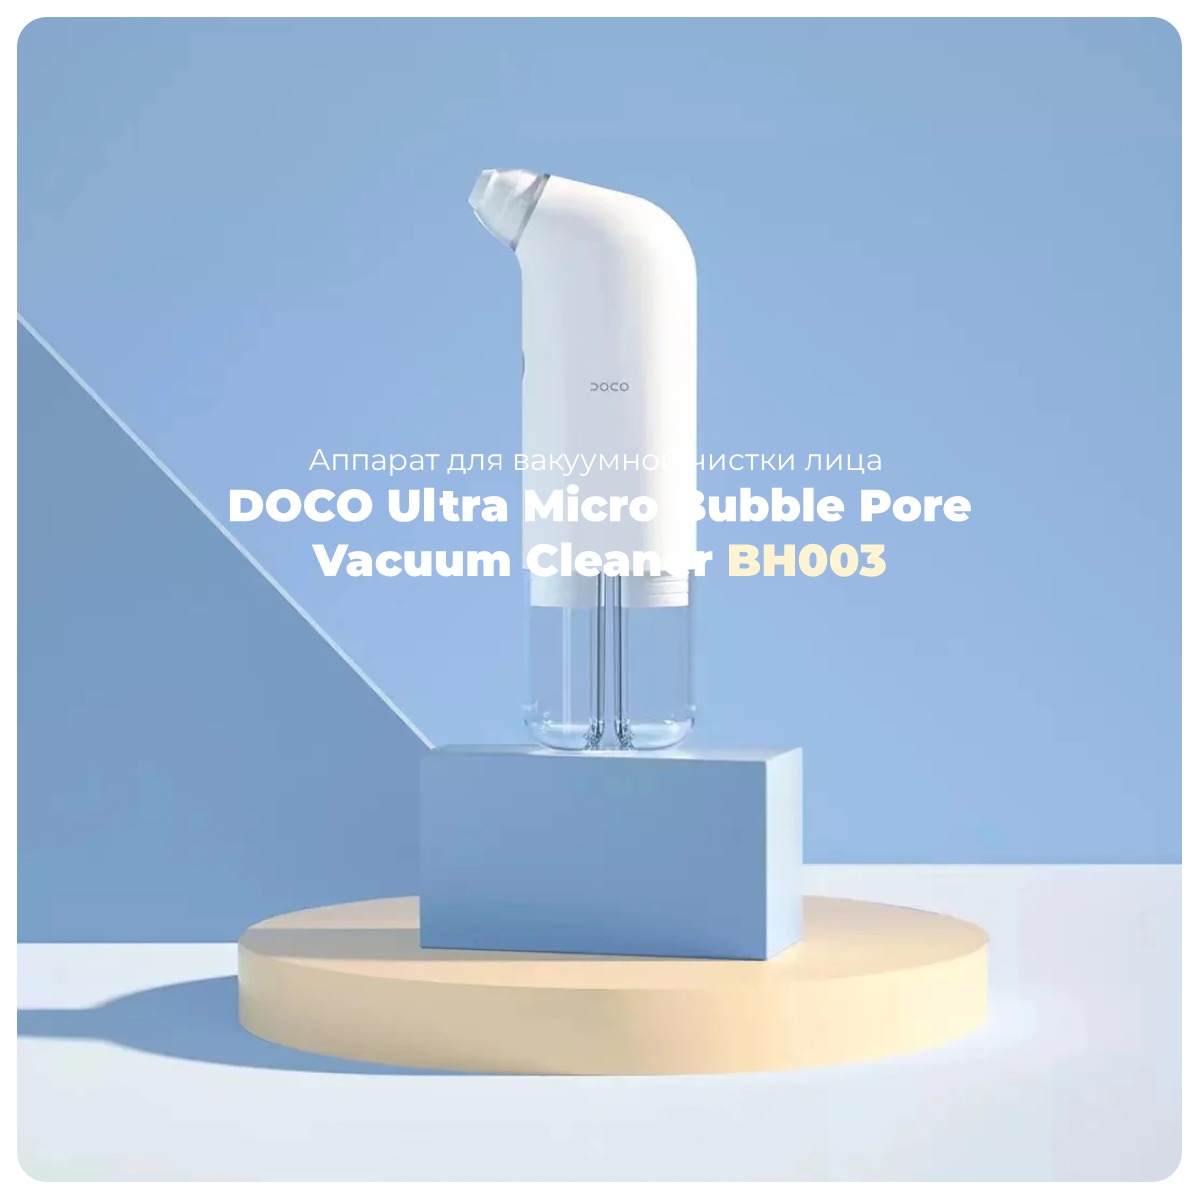 DOCO-Ultra-Micro-Bubble-Pore-Vacuum-Cleaner-BH003-01